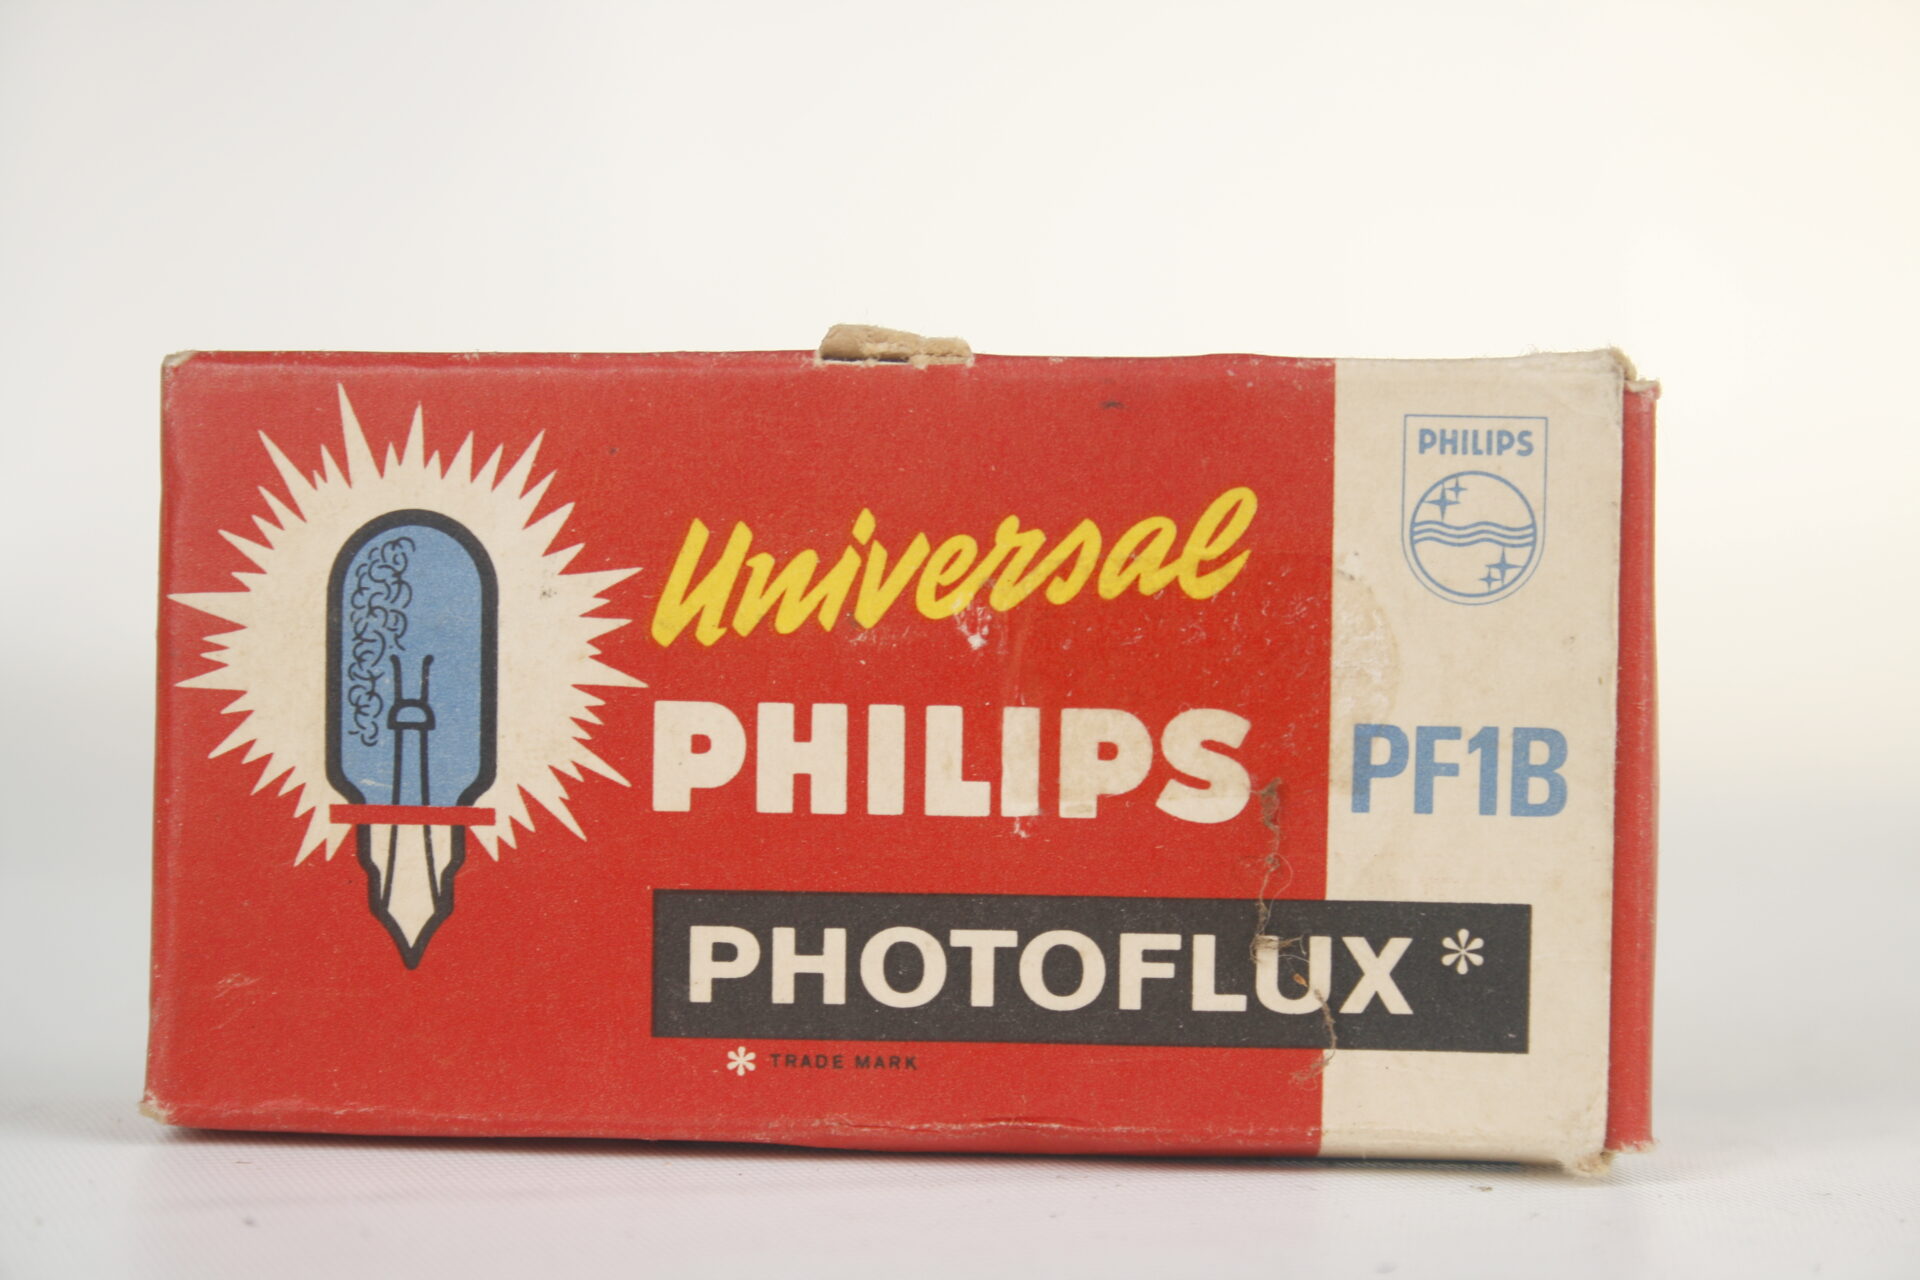 Philips Photoflux PF1B flitslampjes